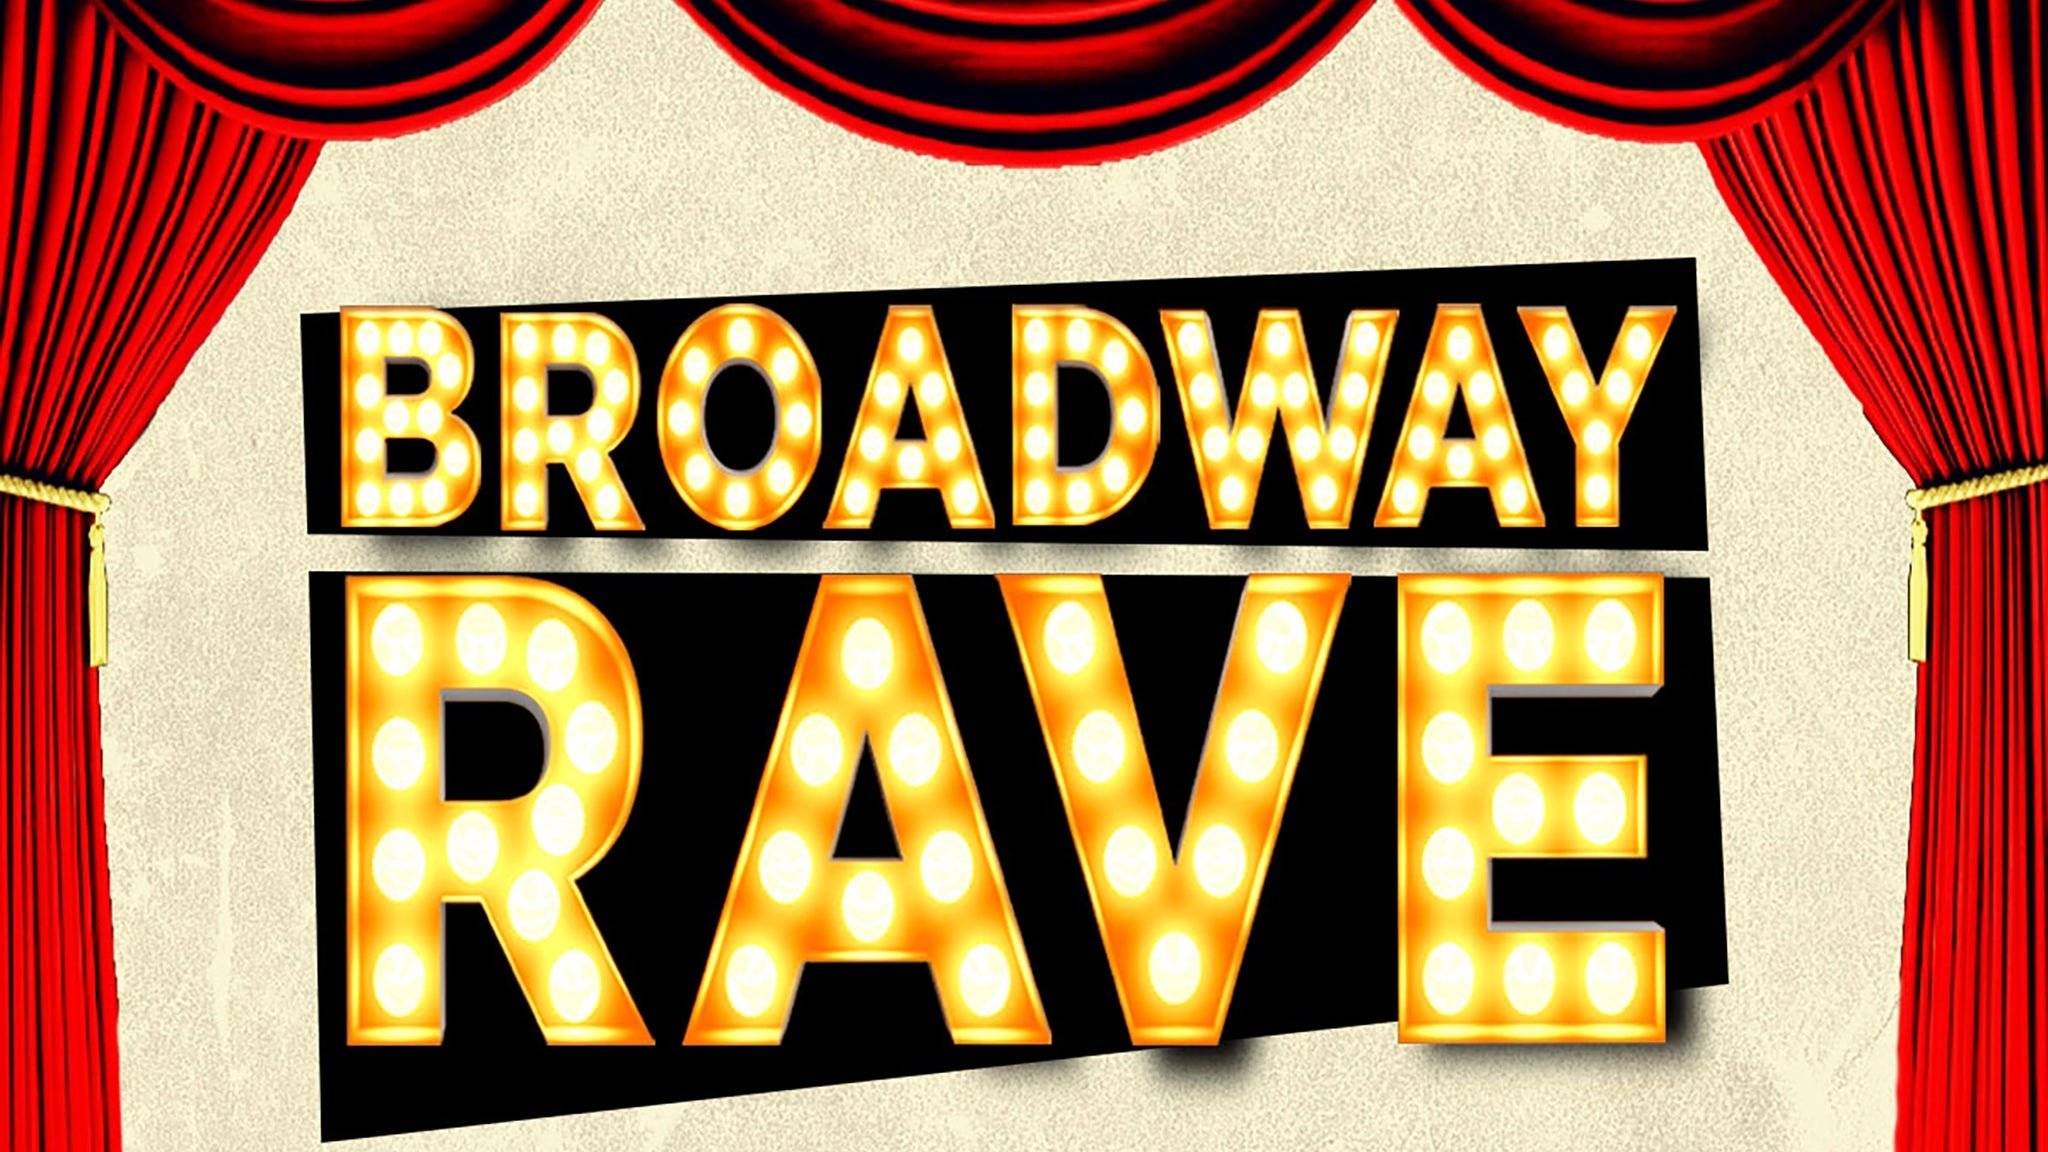 Broadway Rave (18+)